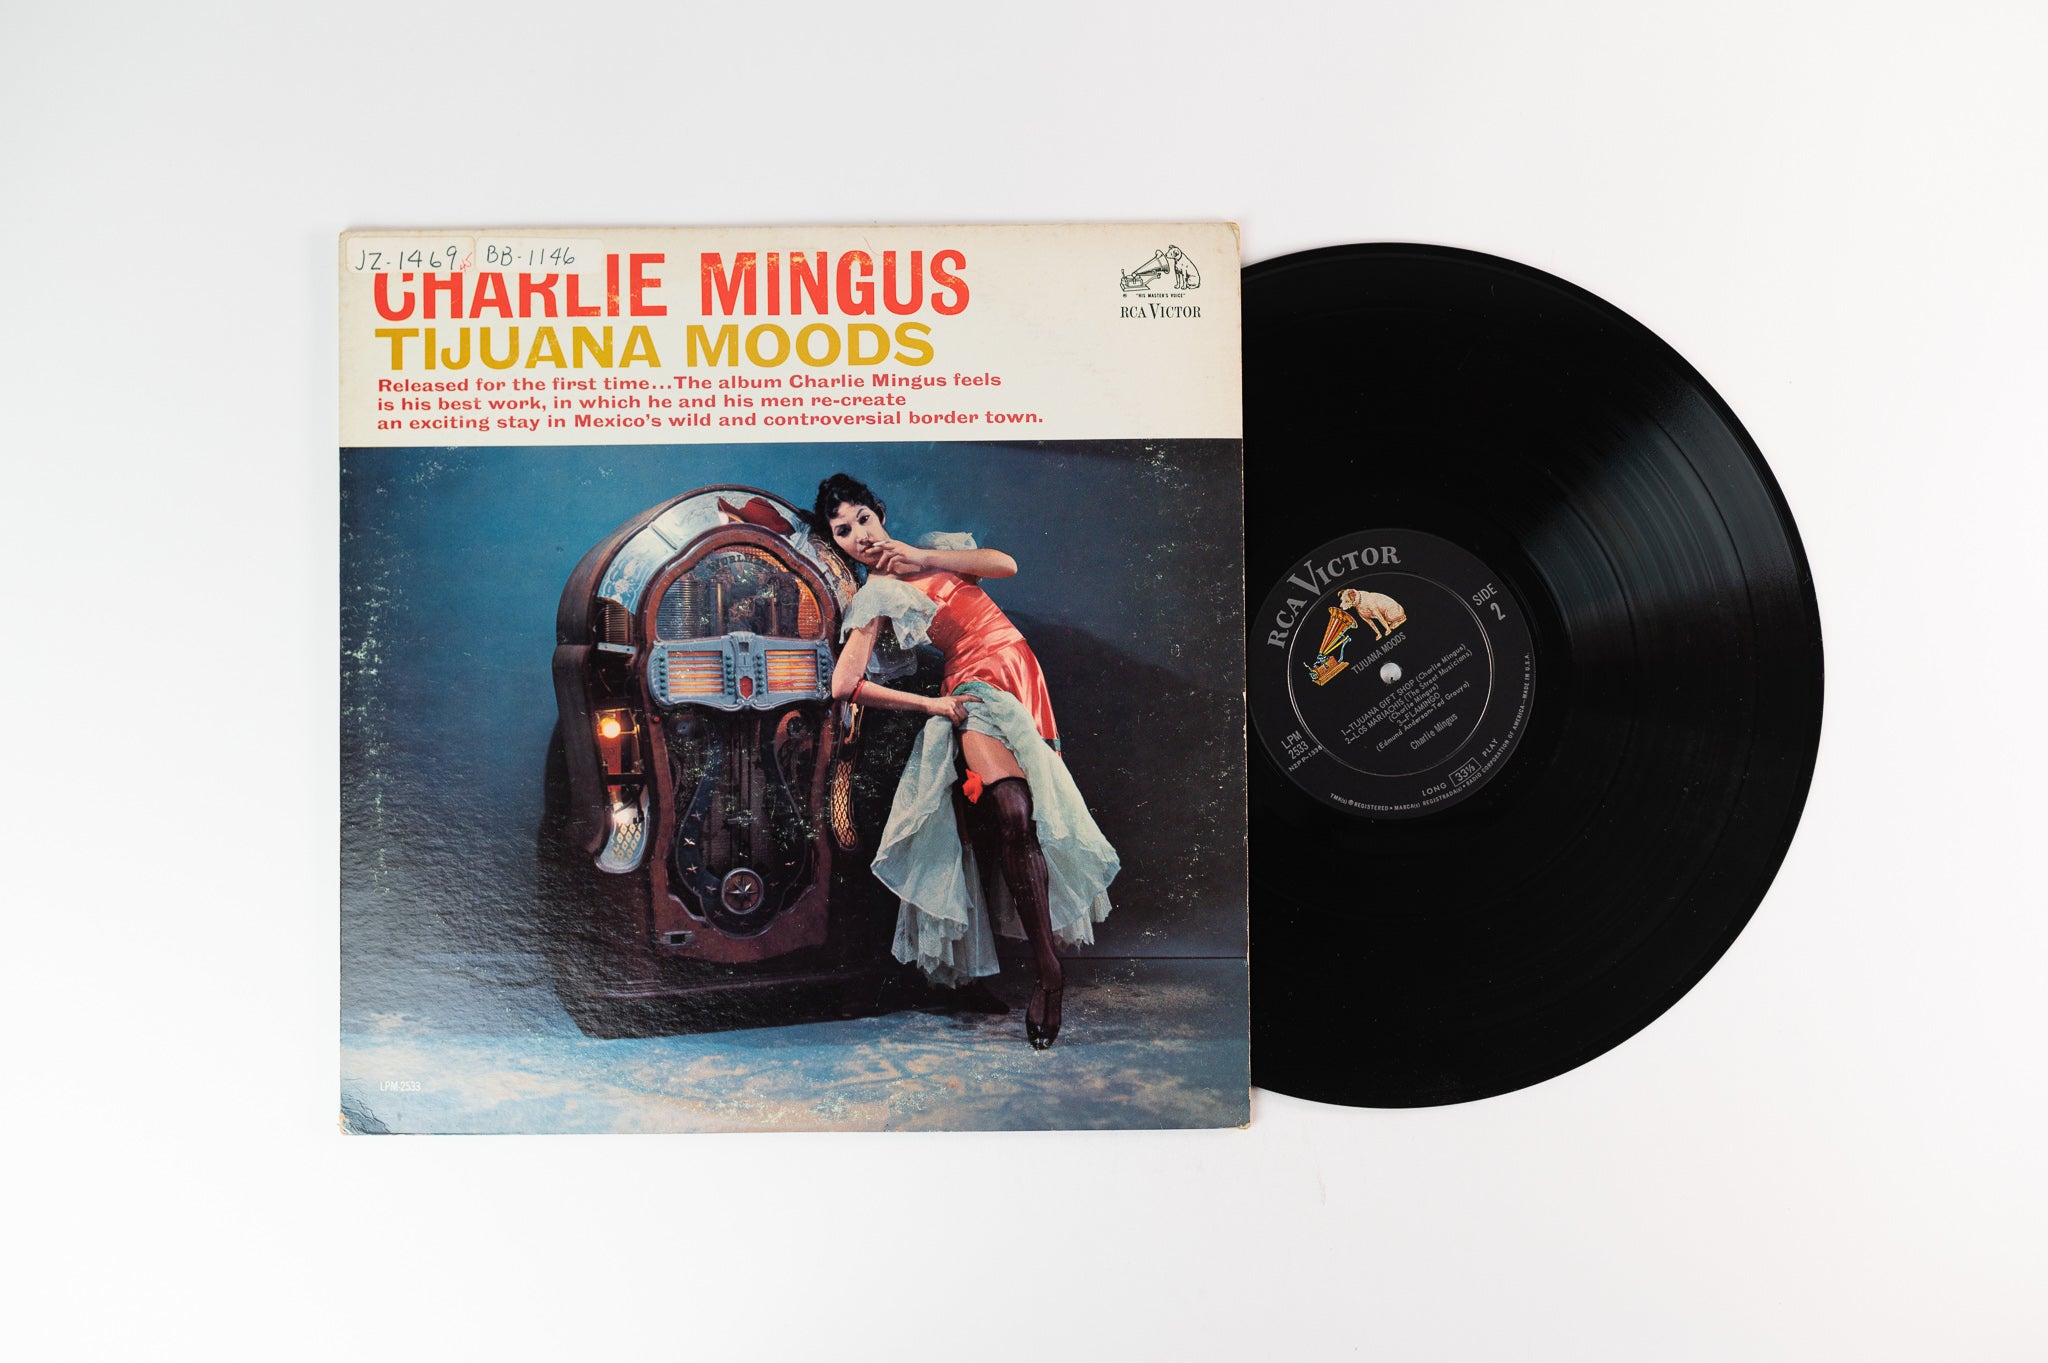 Charles Mingus - Tijuana Moods on RCA Mono